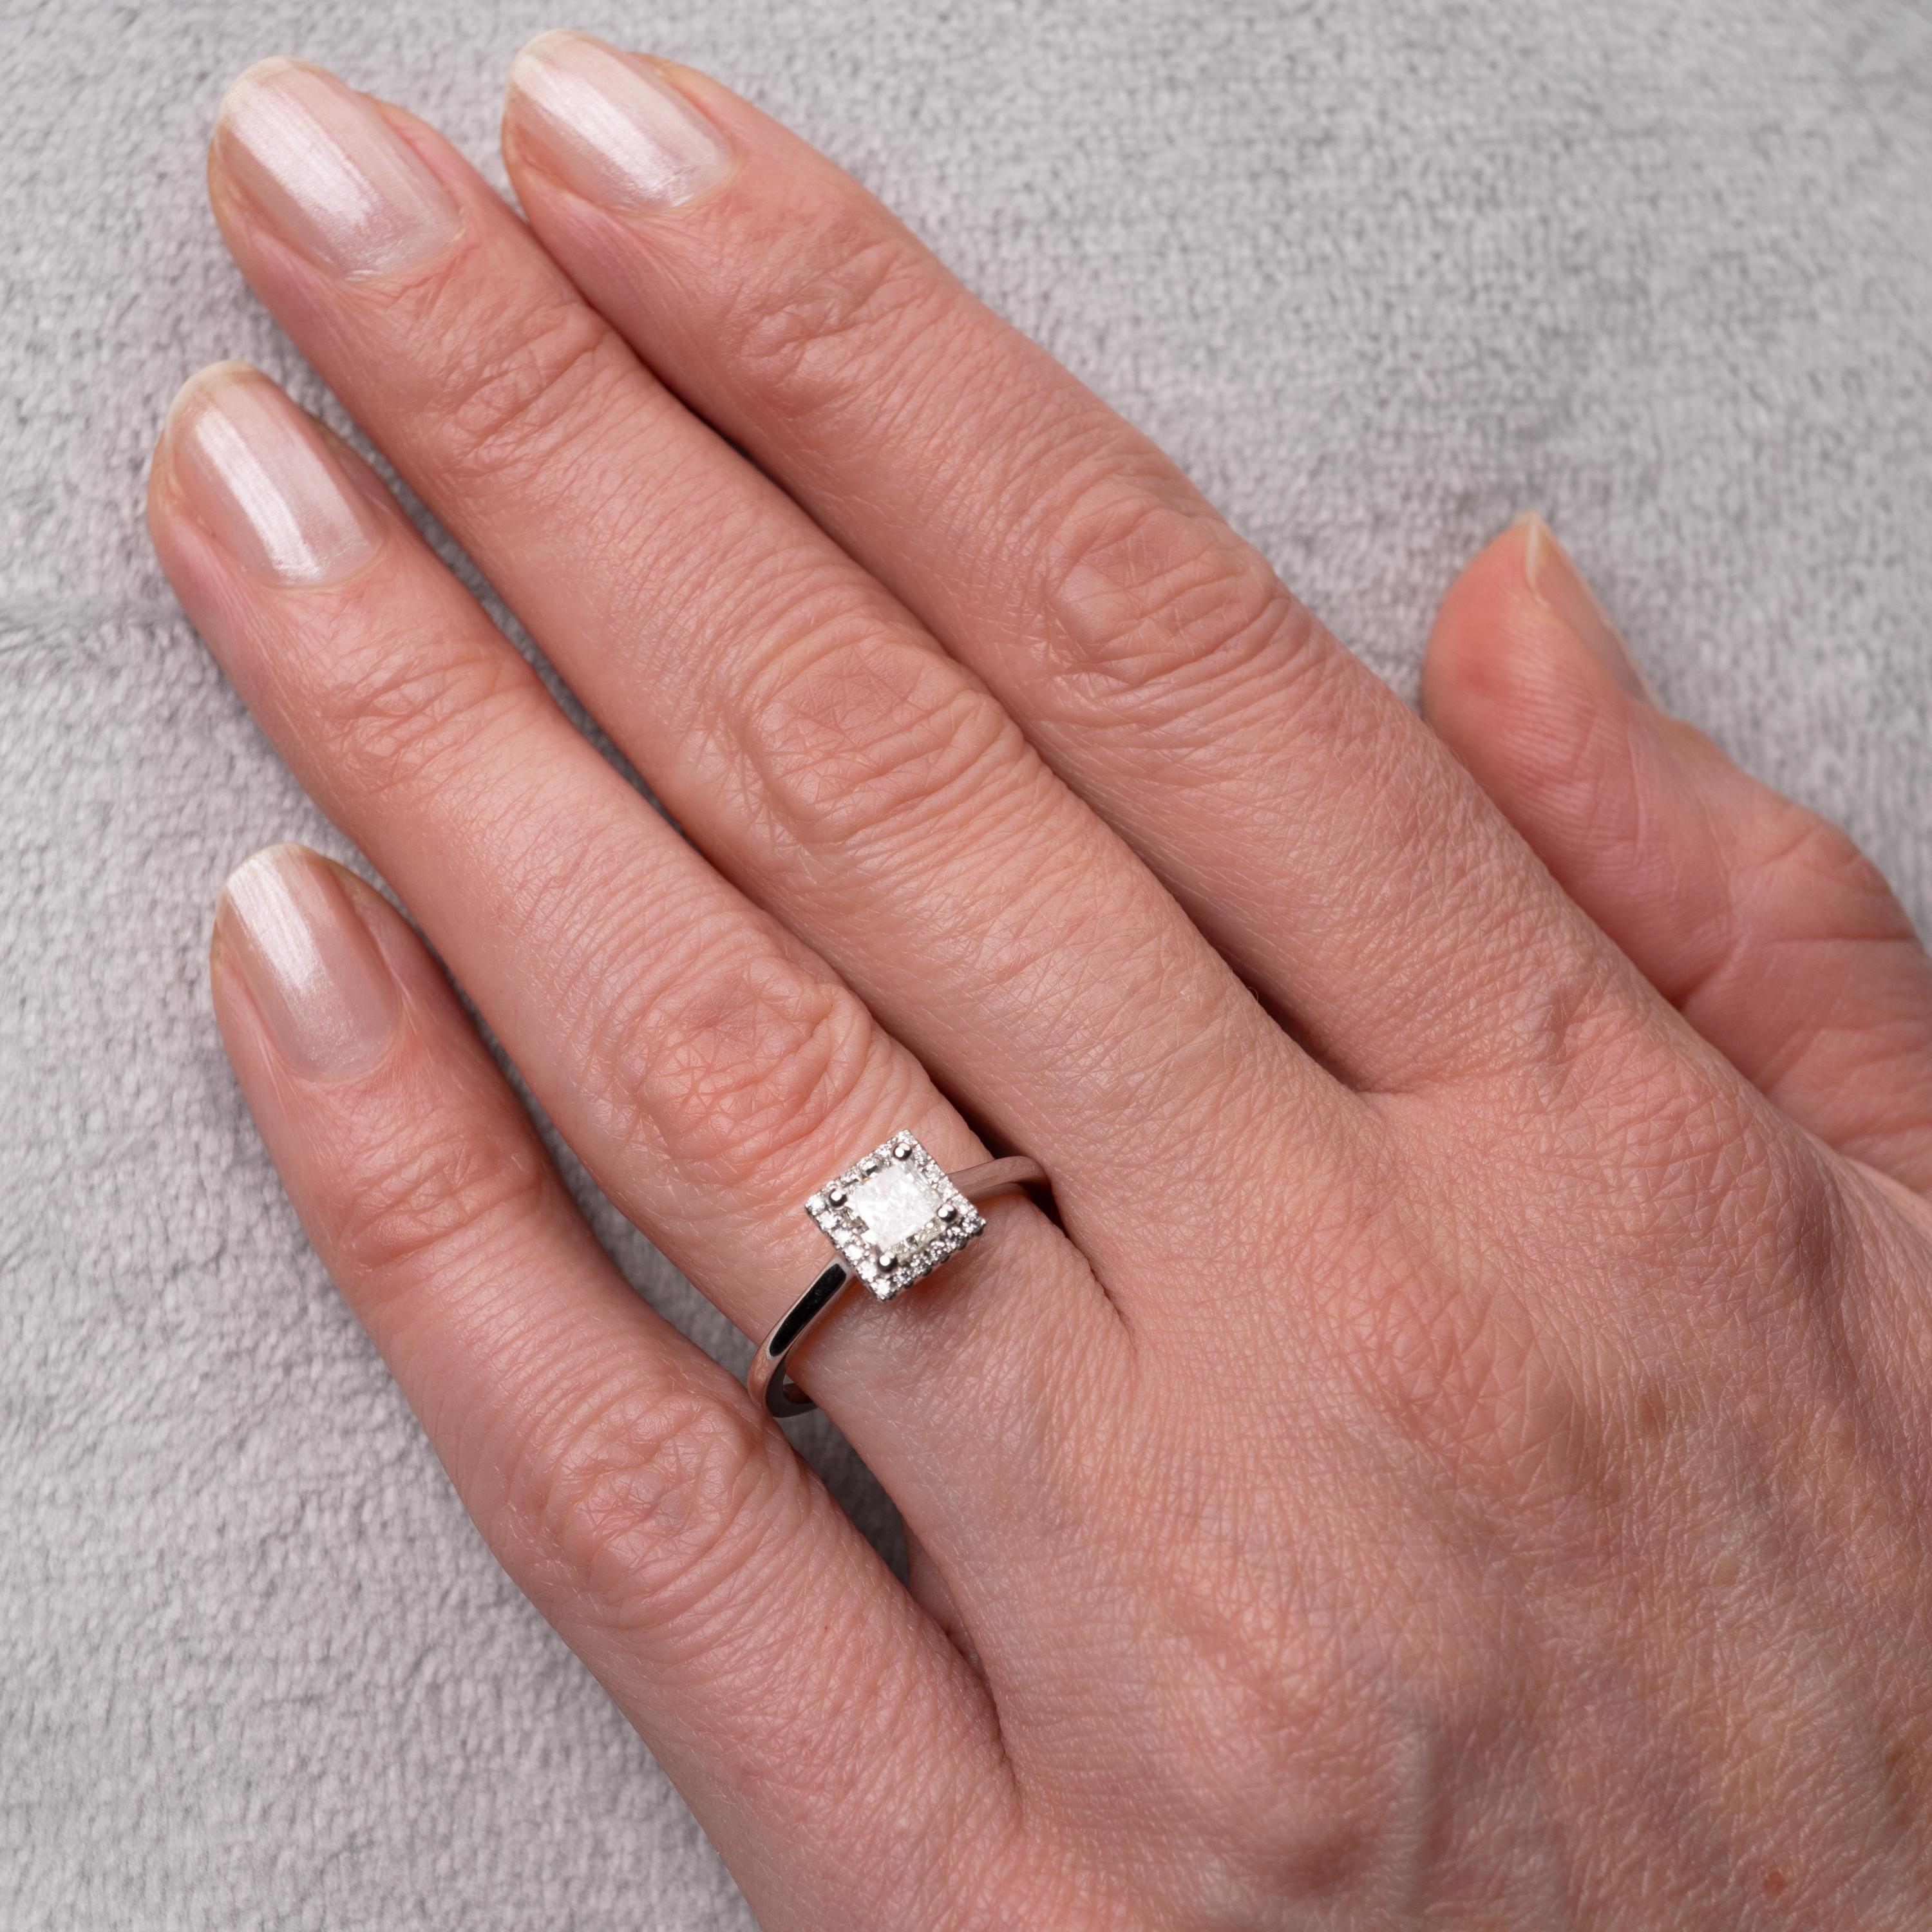 0.65 carat diamond ring